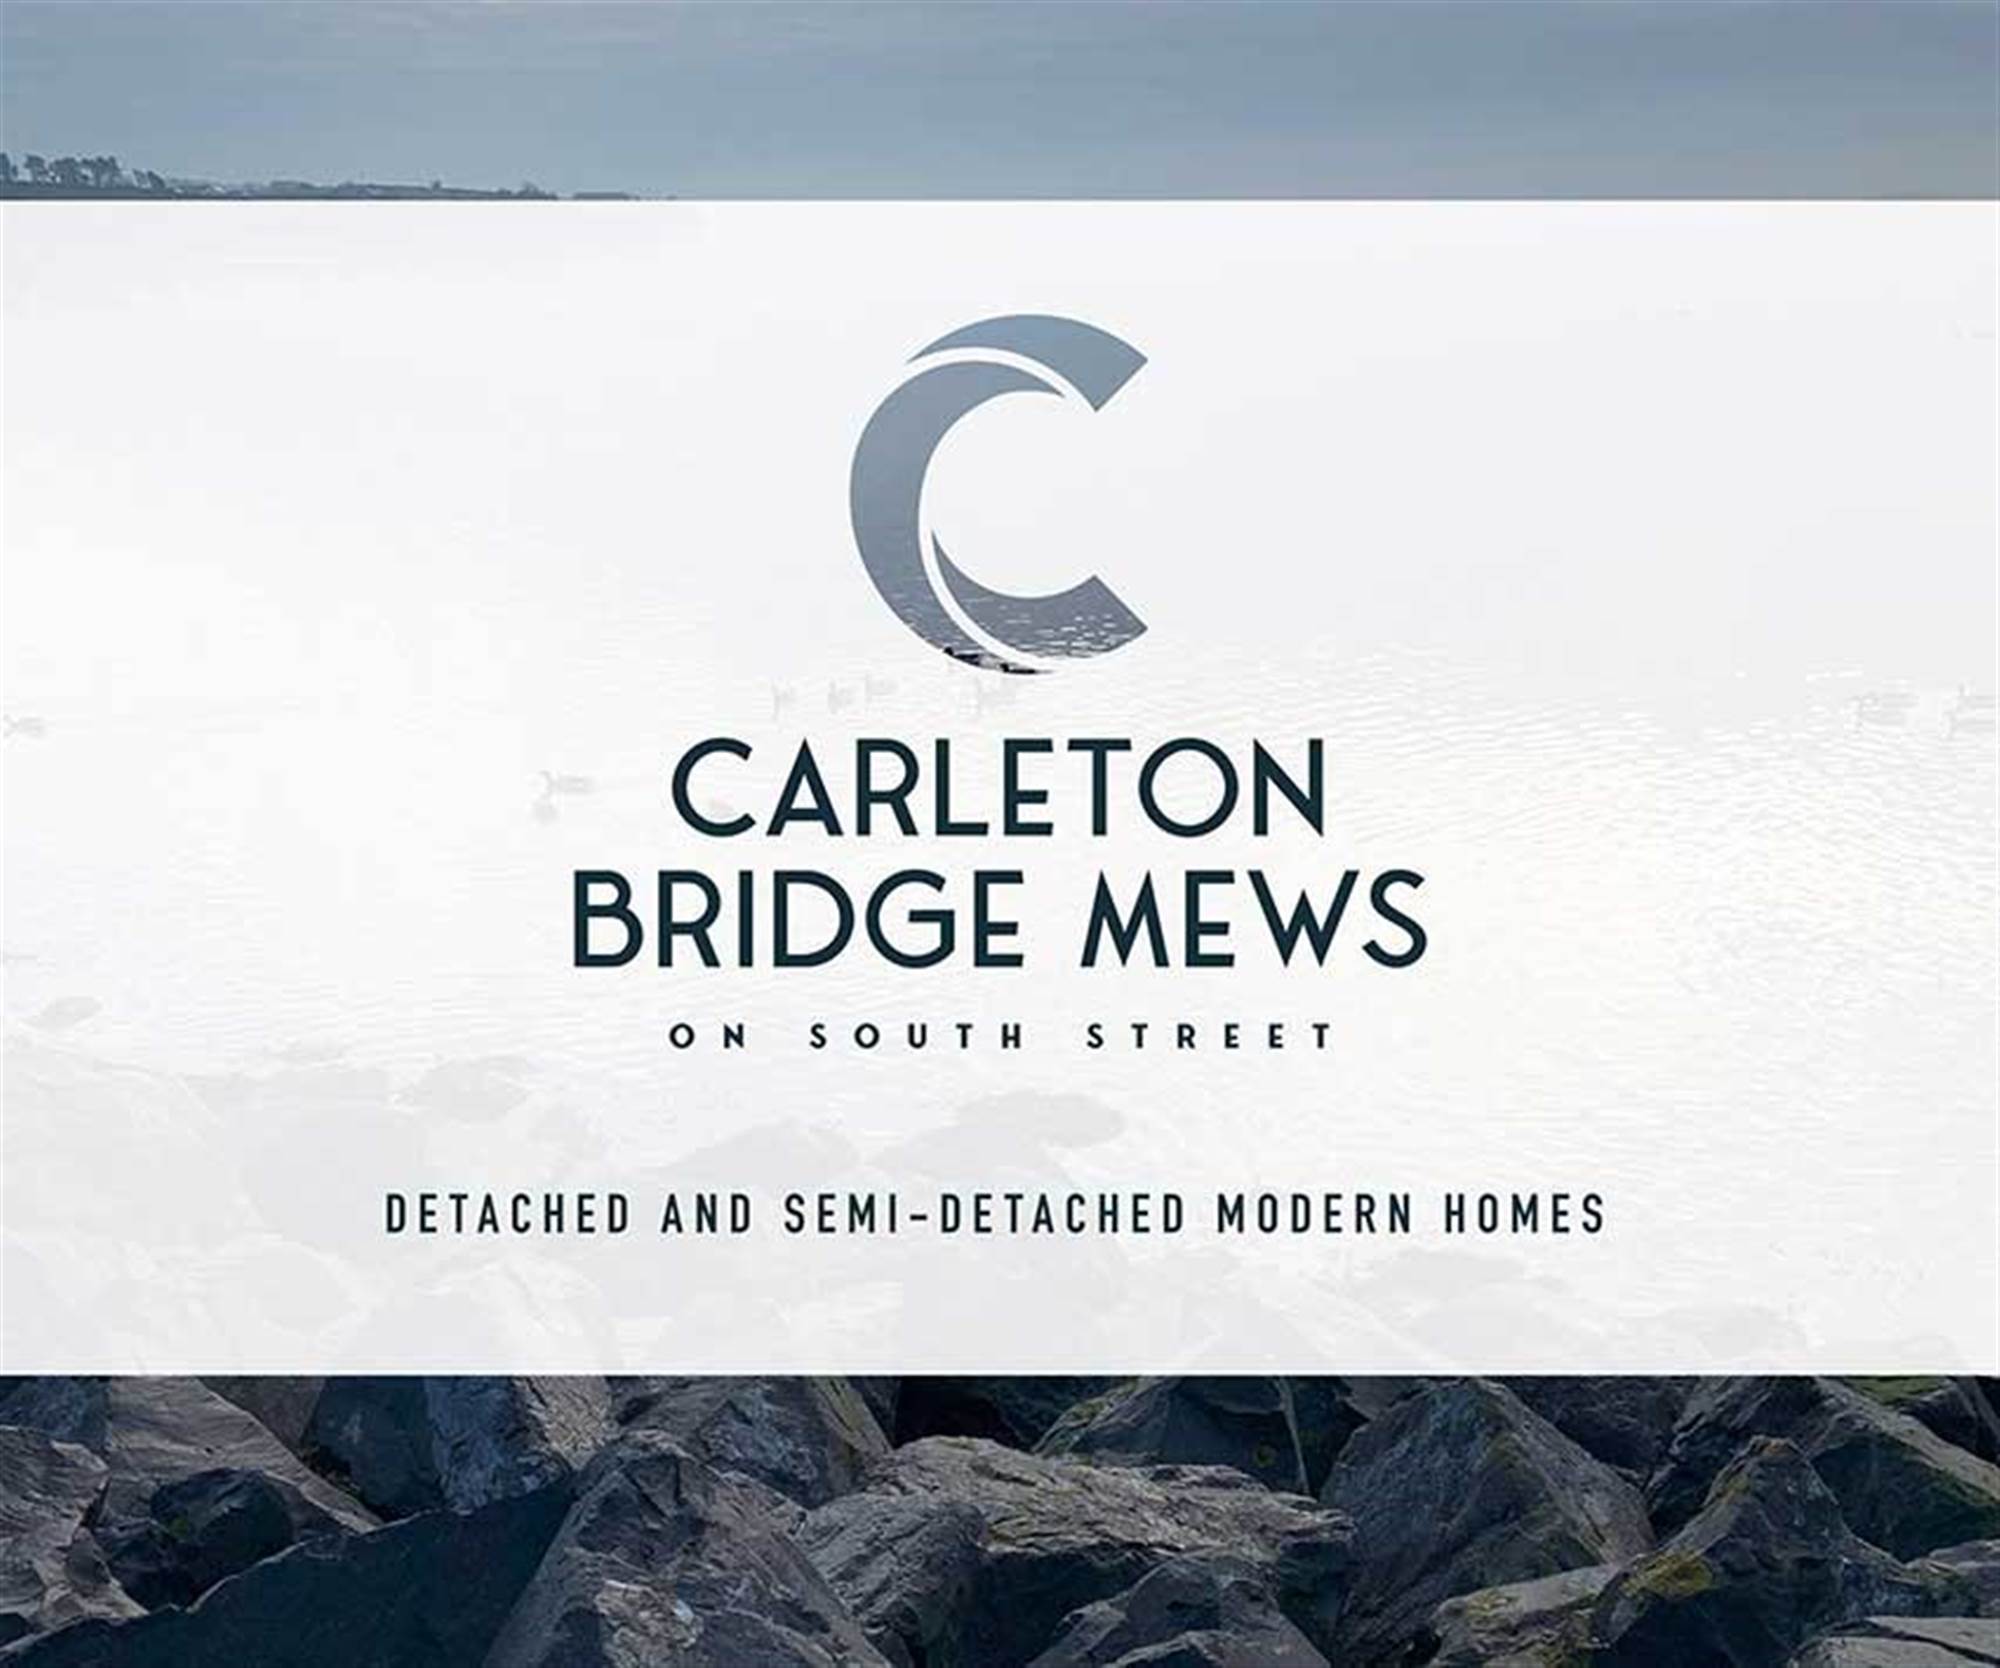 16 Carleton Bridge Mews